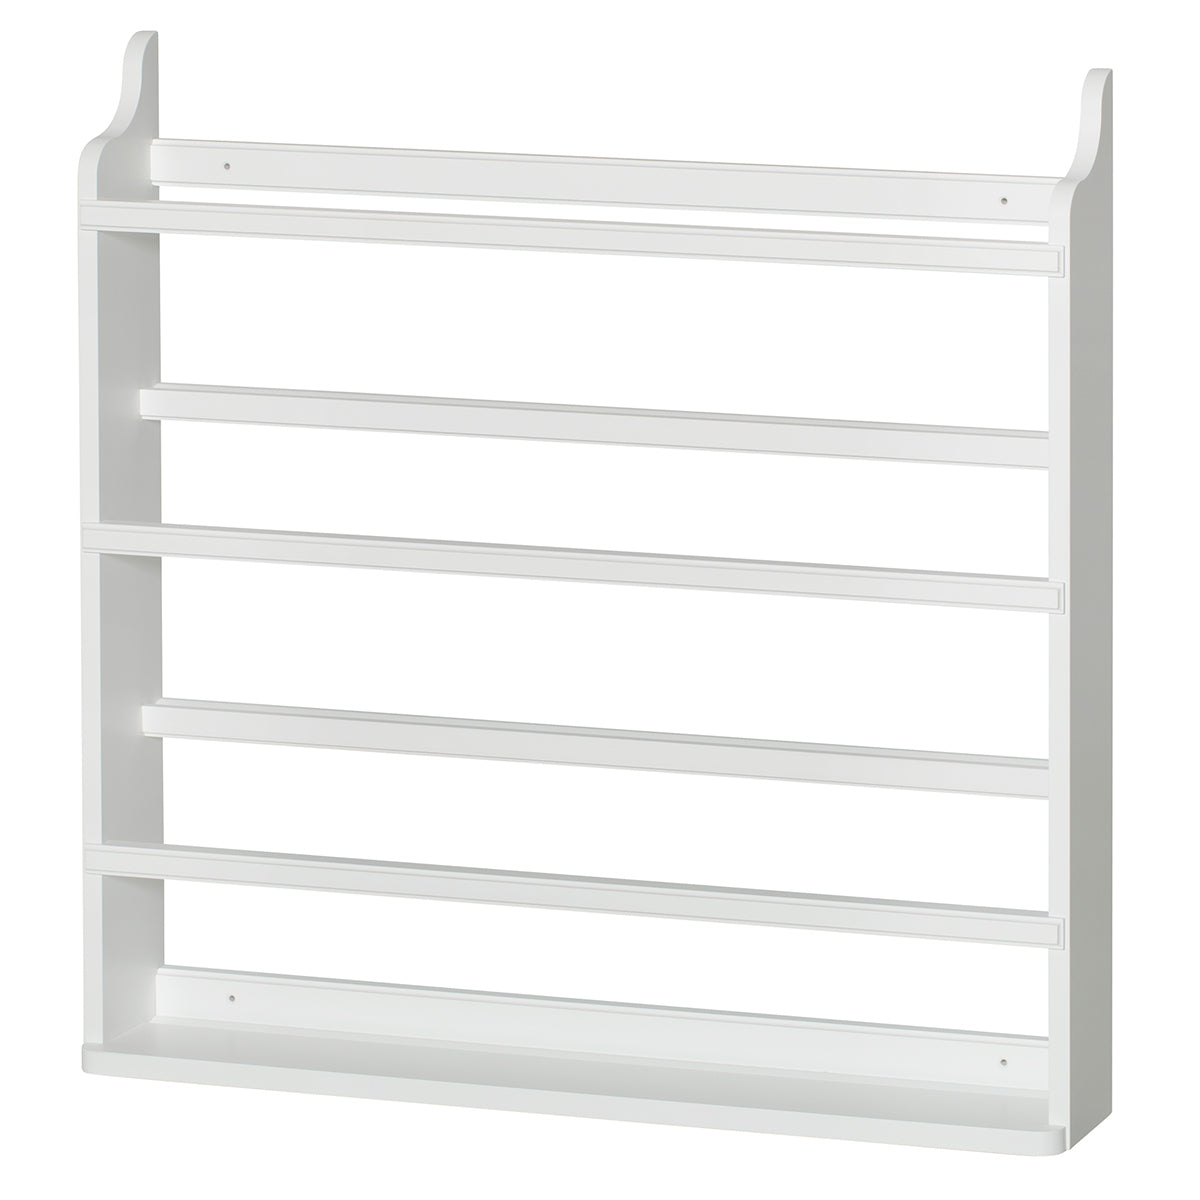 Oliver Furniture plate rack, white